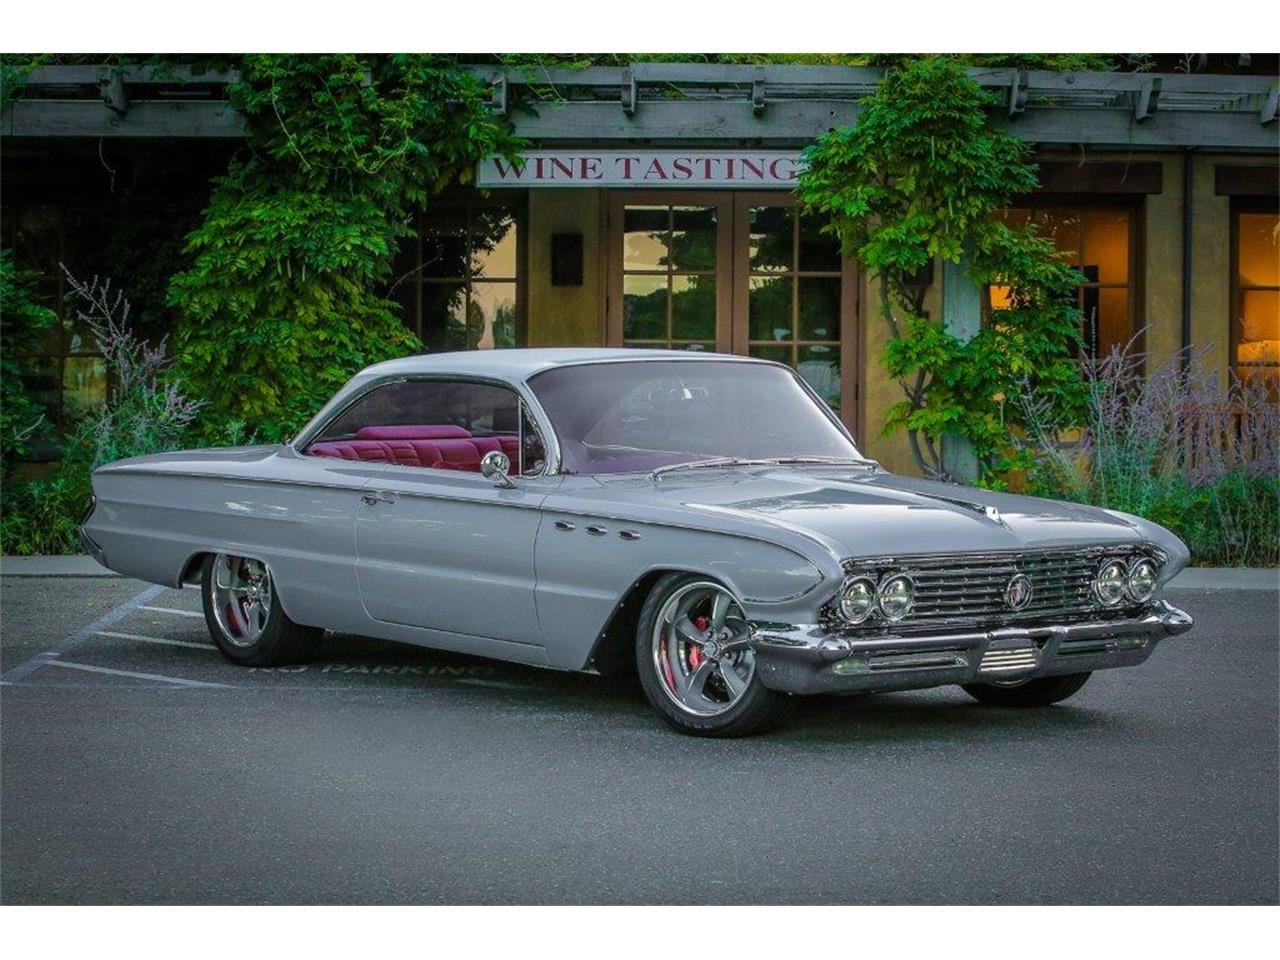 For Sale: 1961 Buick LeSabre in Lockeford, California.